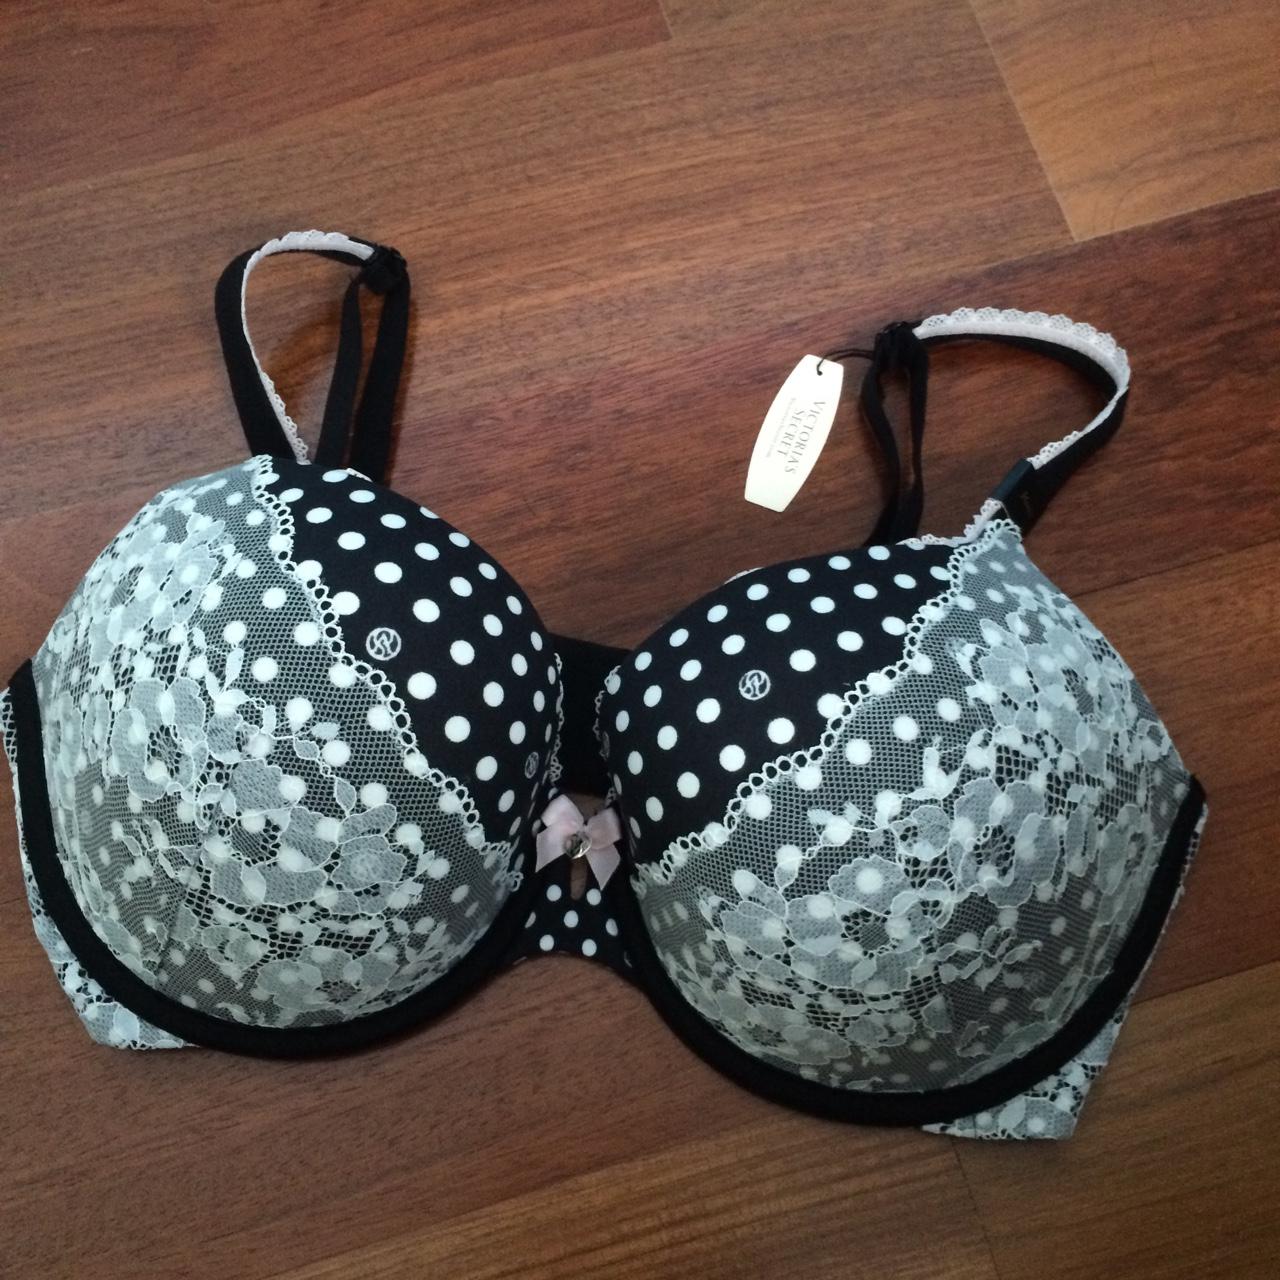 Brand new Victoria's Secret bra size 34DDD it has